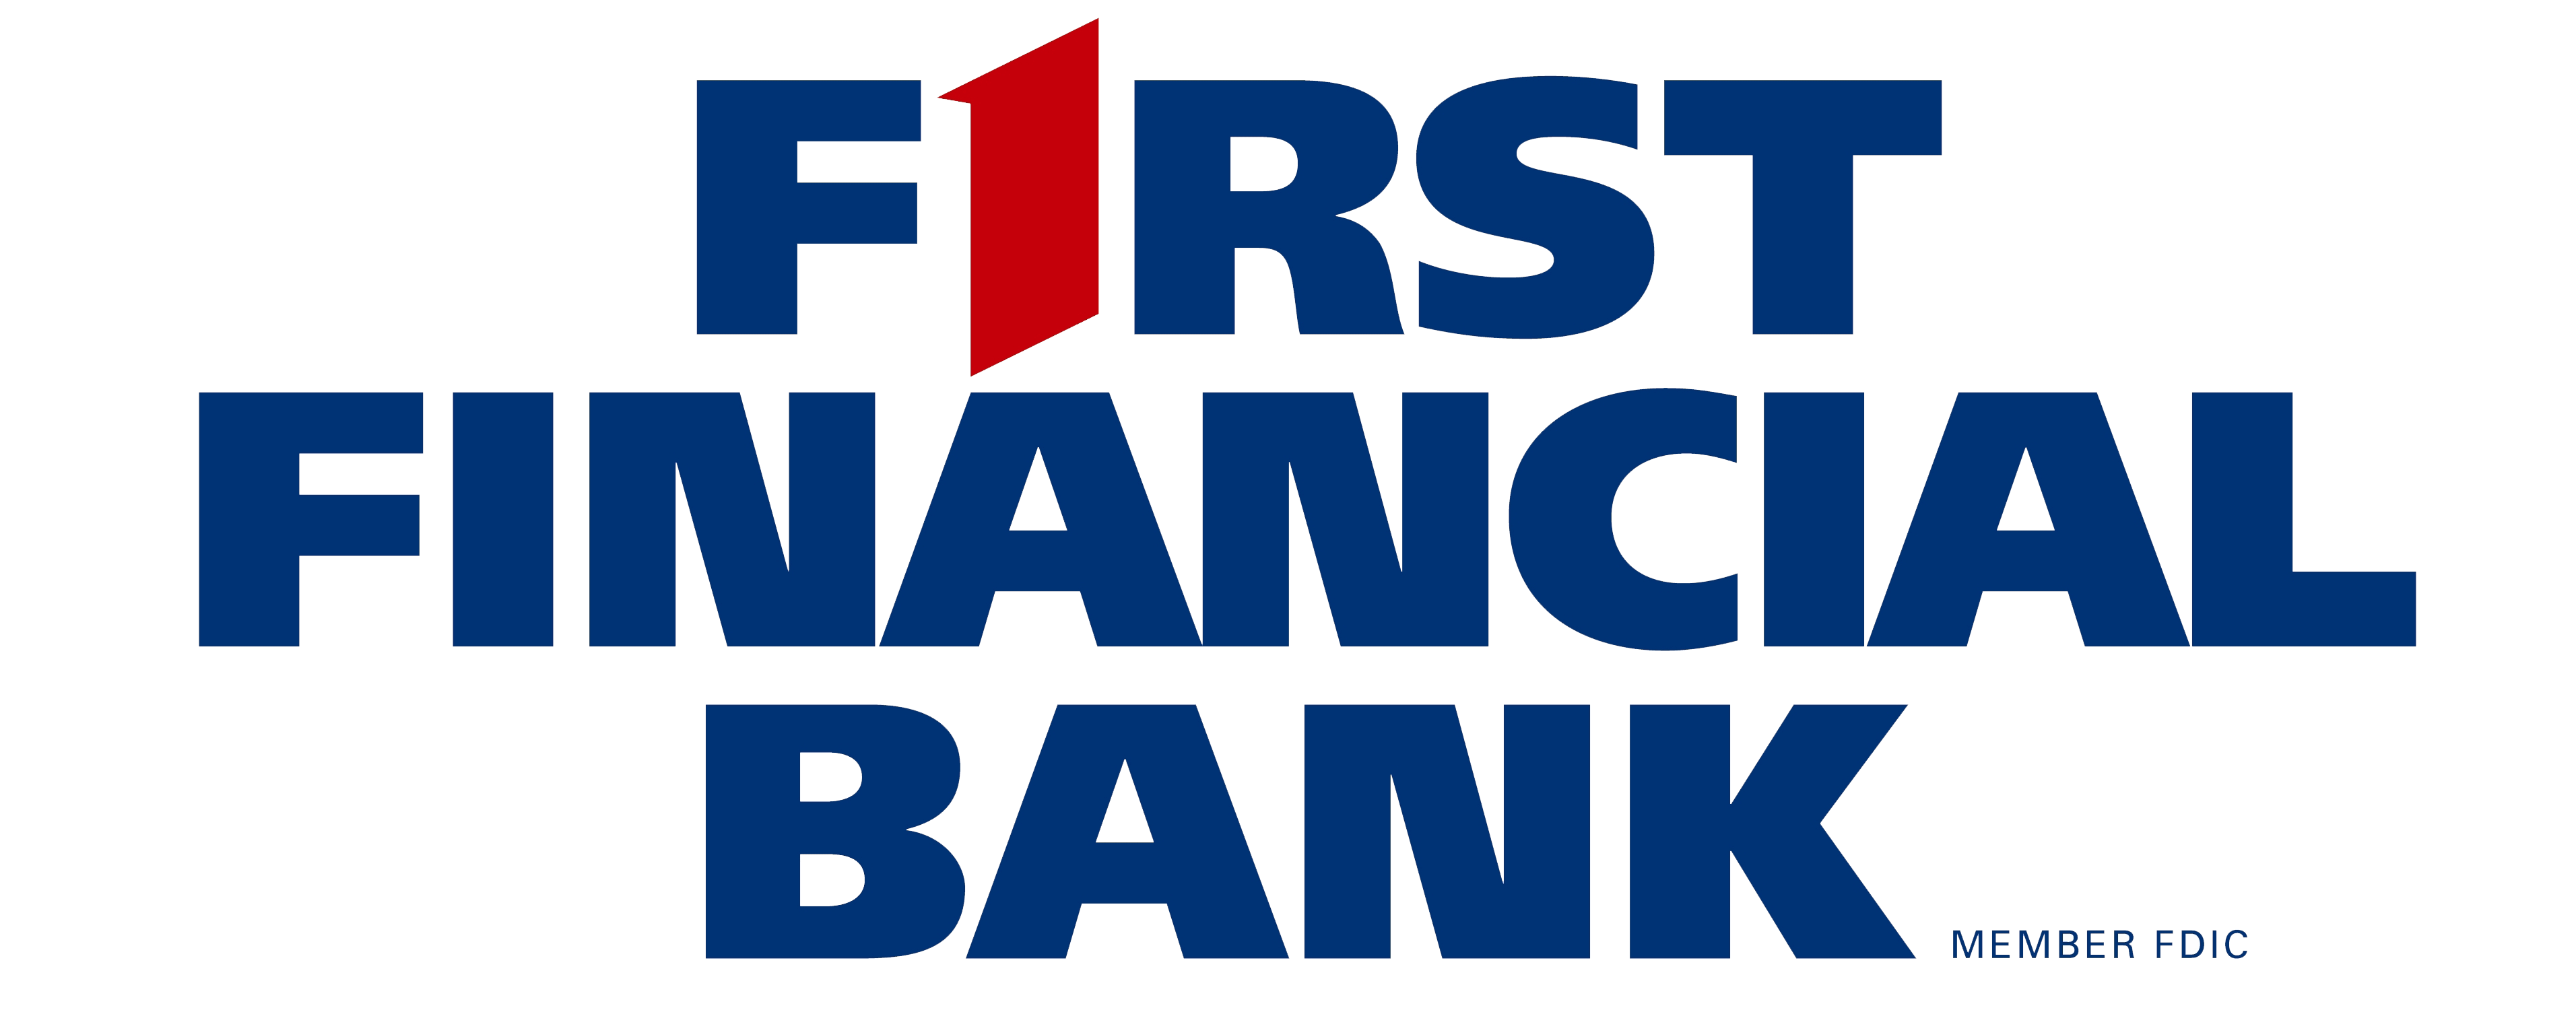 First Financial bank